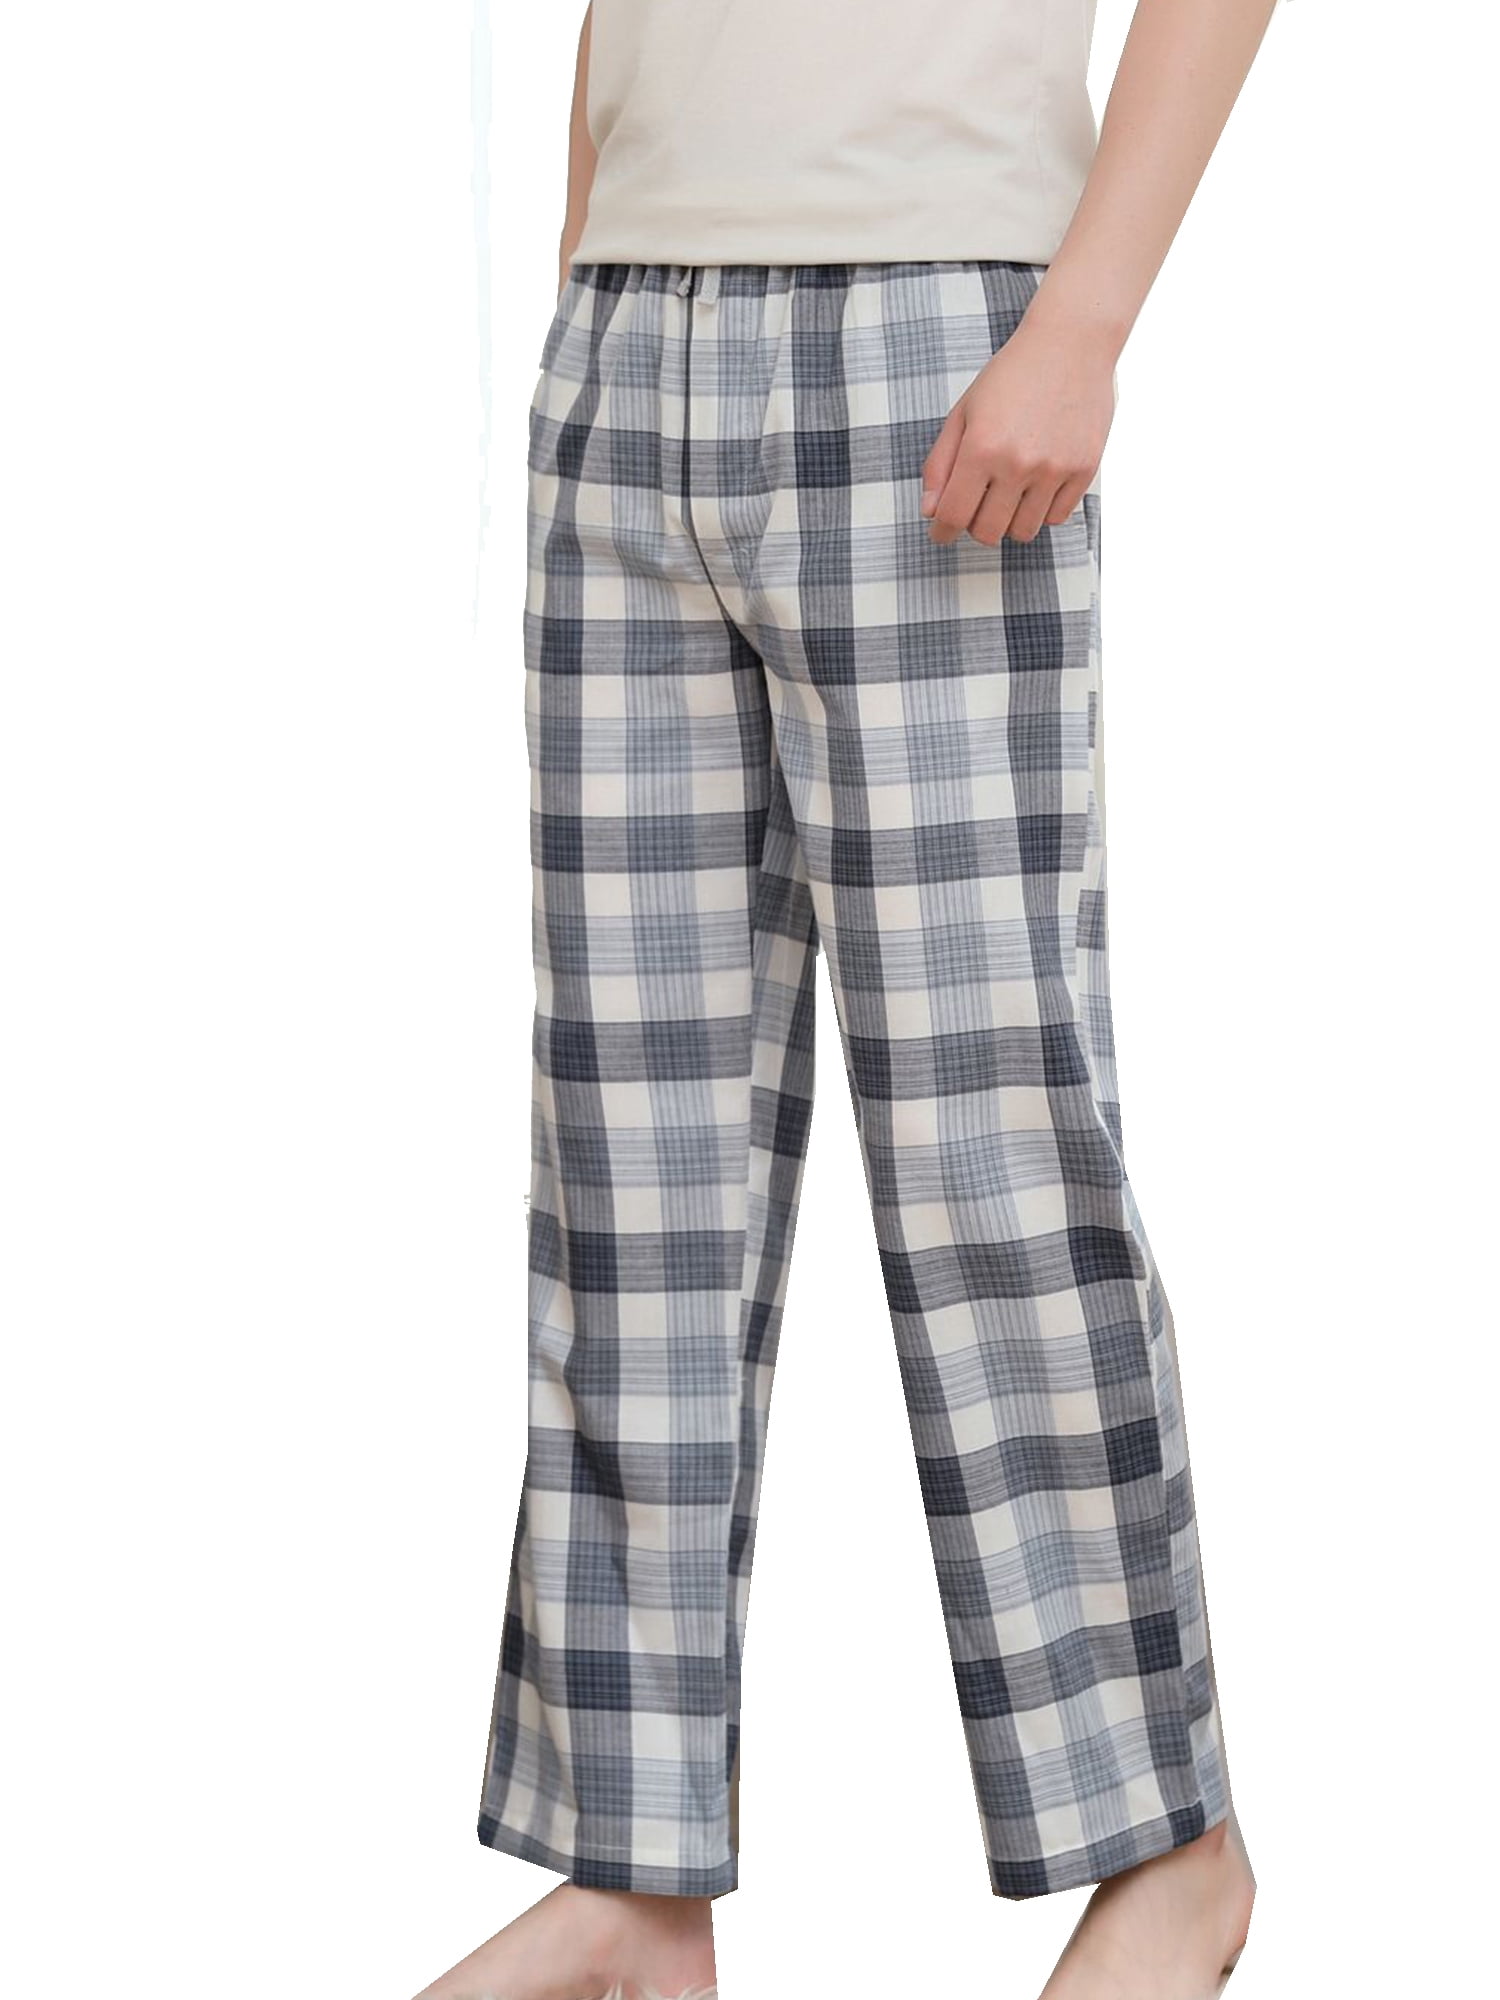 OCHENTA Mens Cotton Woven Pajama Lounge Pant Plaid Soft Sleepwear